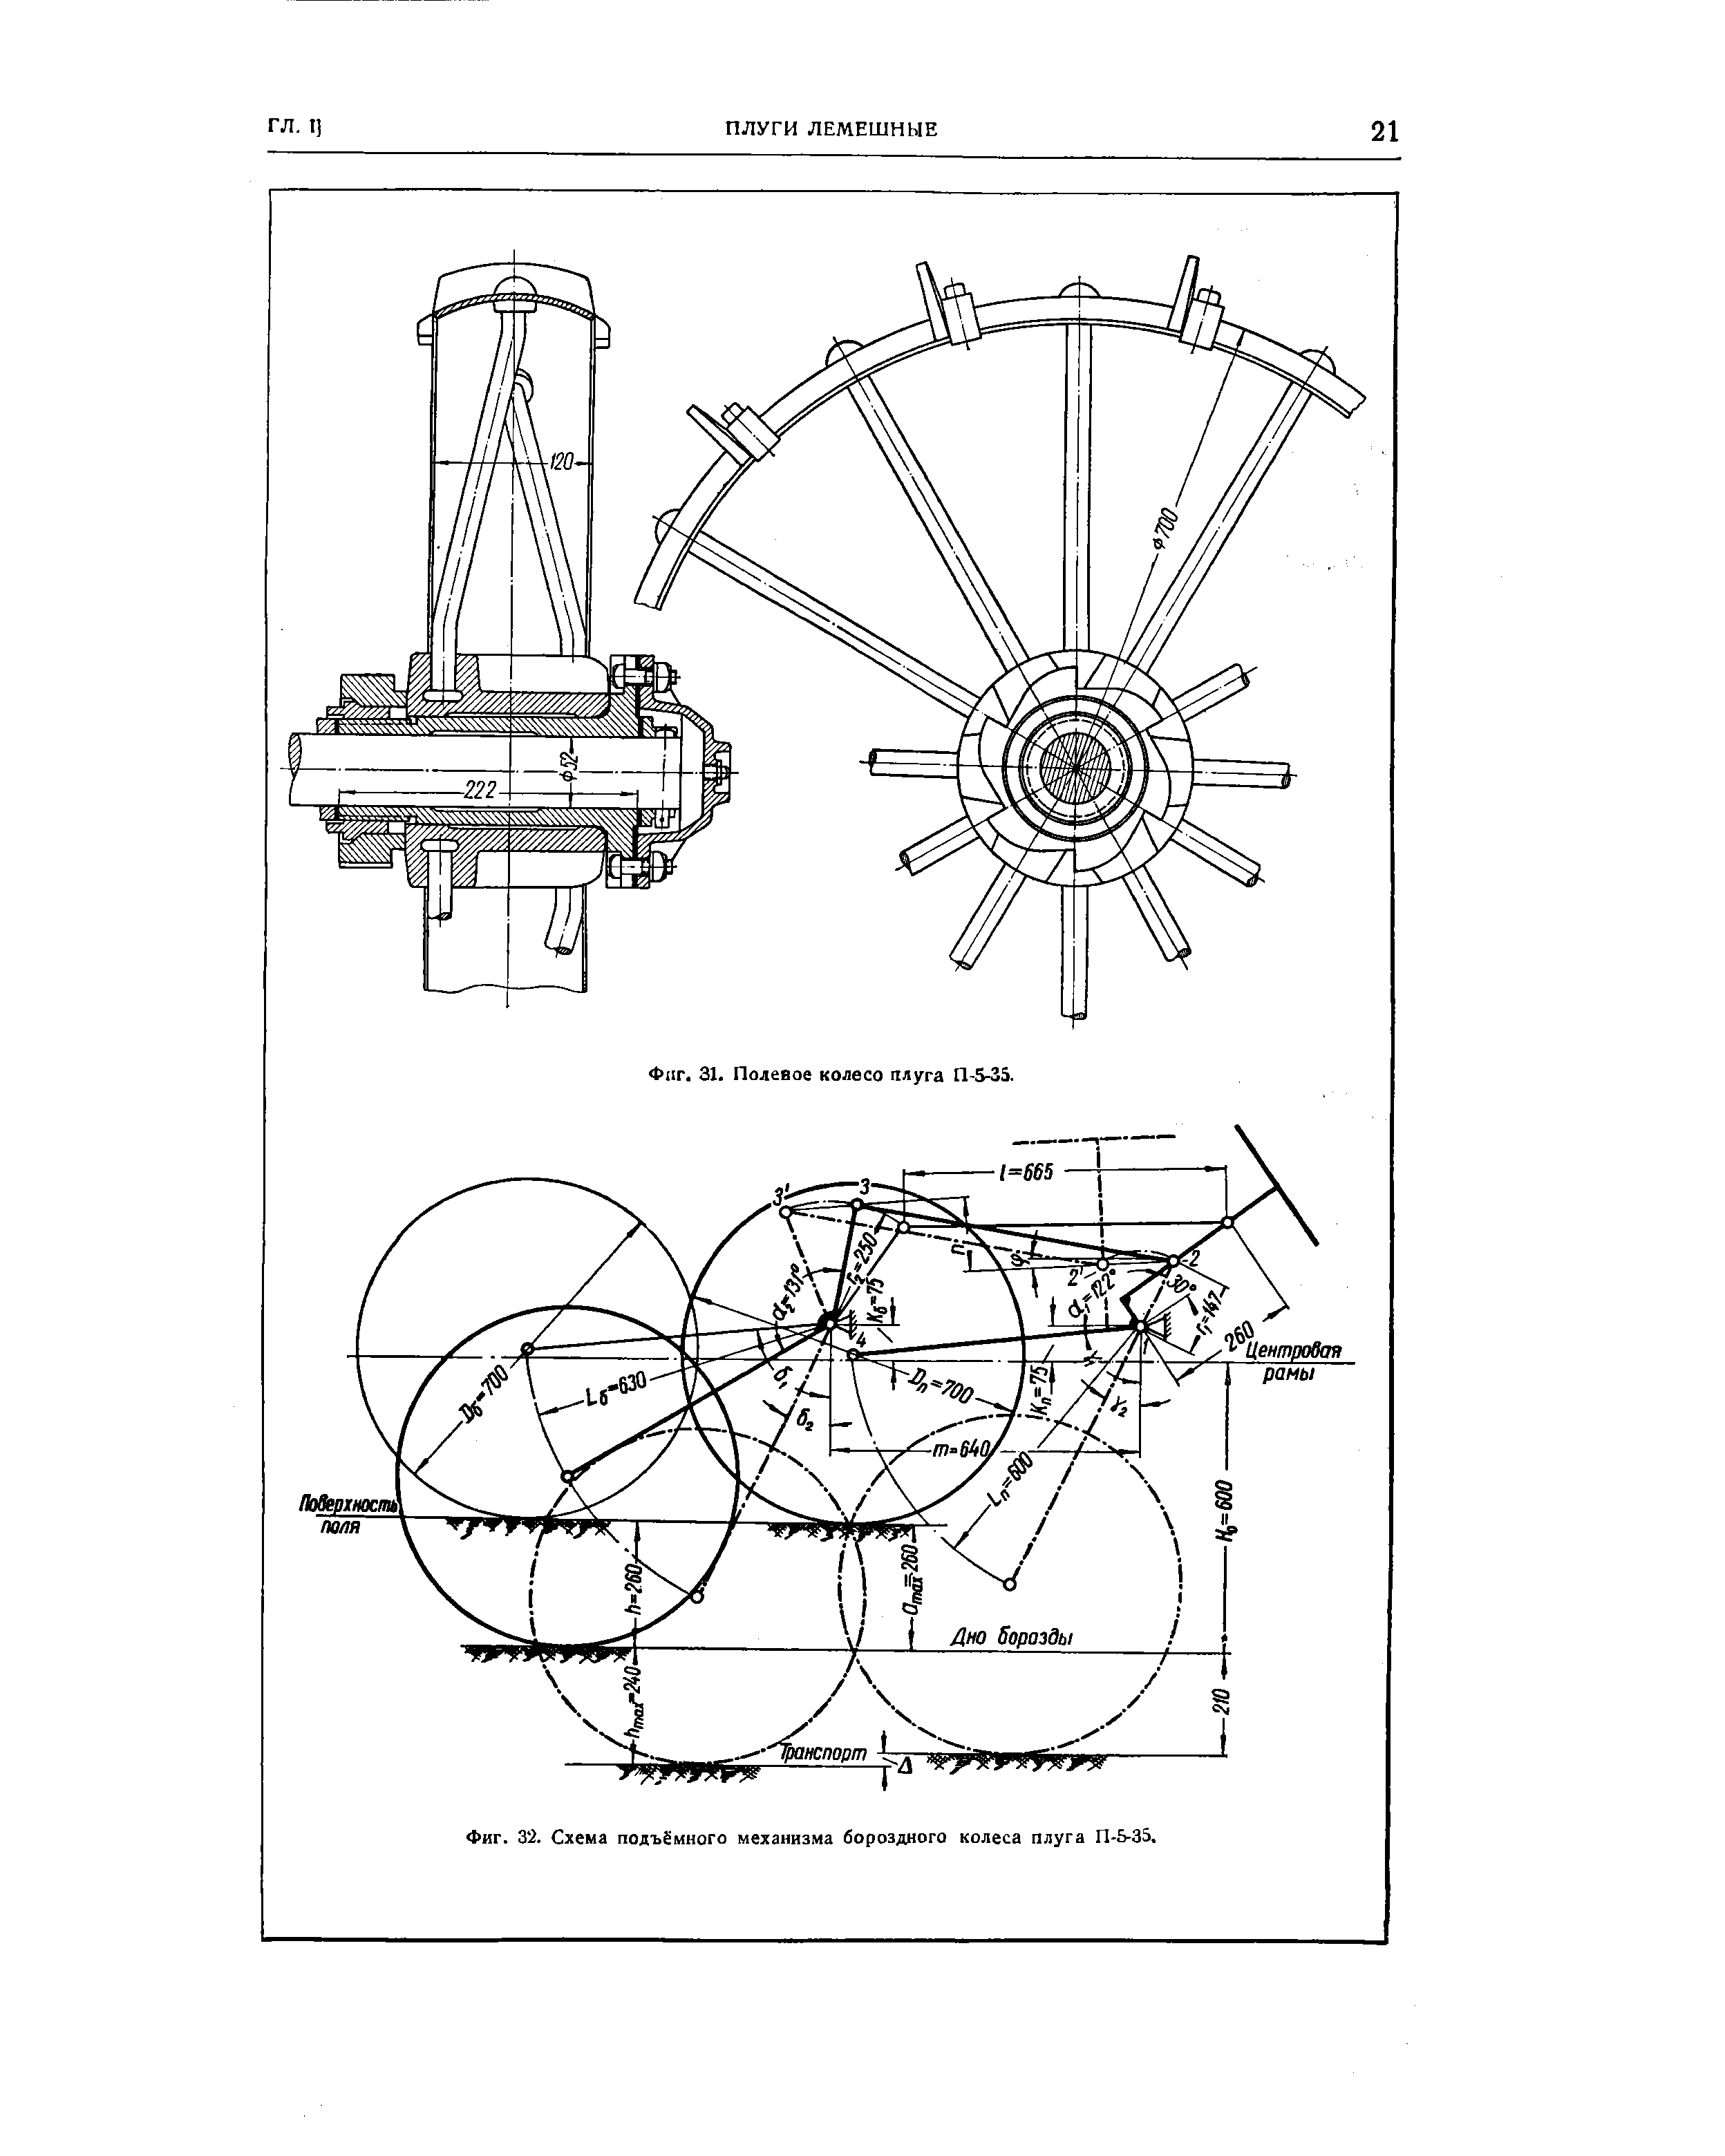 Фиг. 32. Схема подъёмного механизма бороздного колеса плуга П-5-35.
